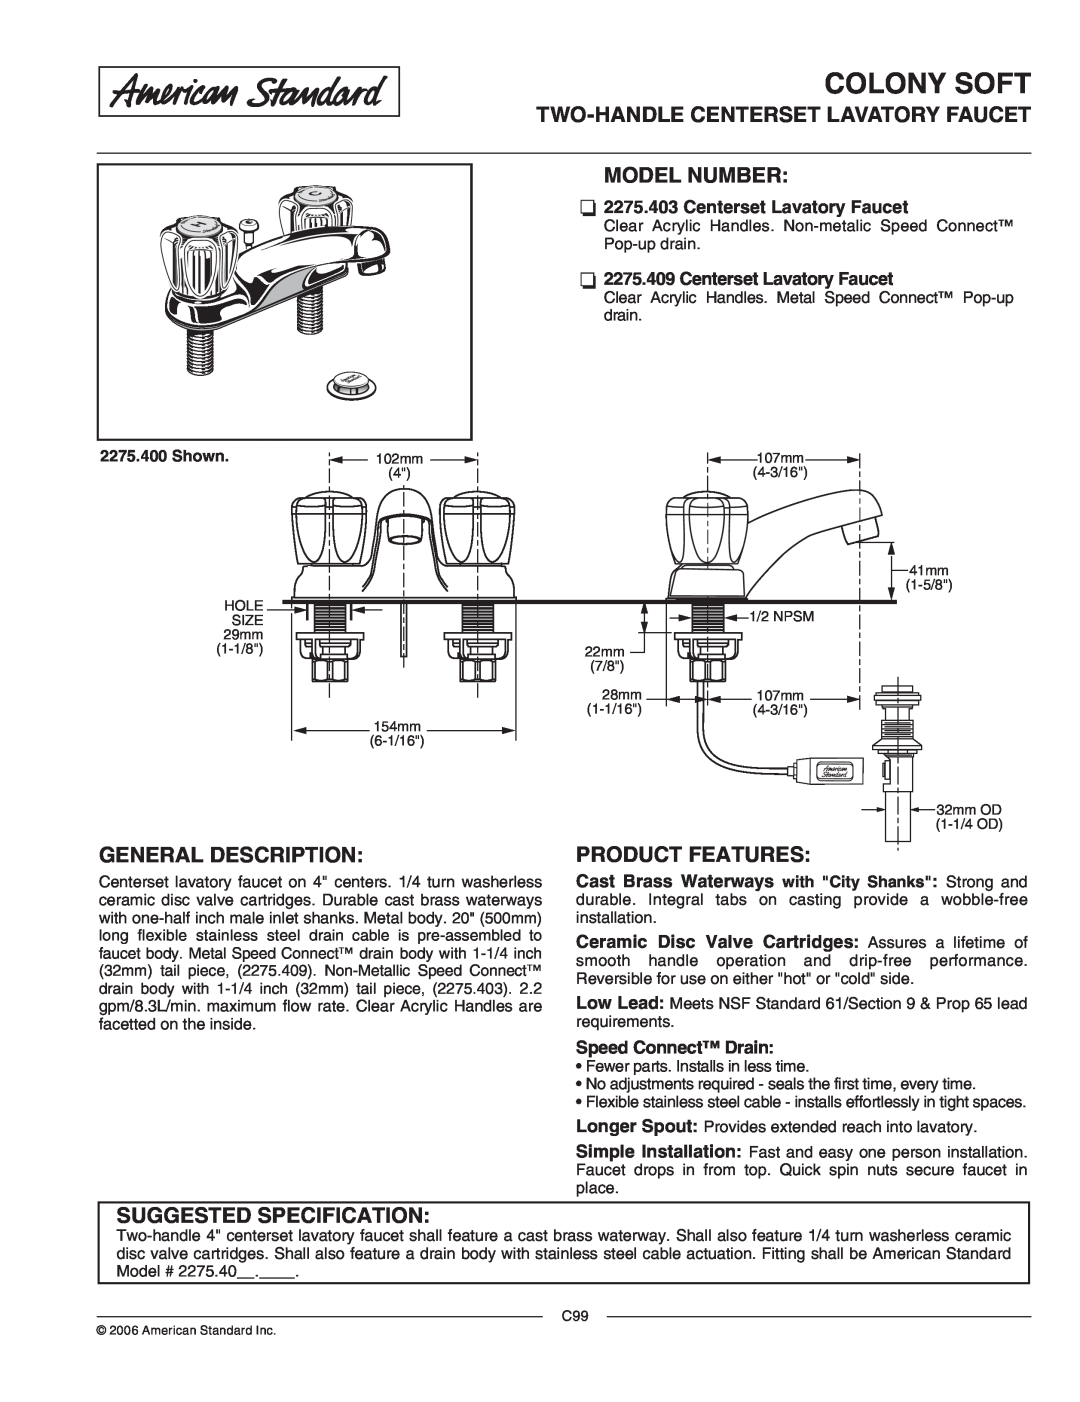 American Standard 2275.40 manual Colony Soft, Two-Handlecenterset Lavatory Faucet Model Number, General Description, Shown 